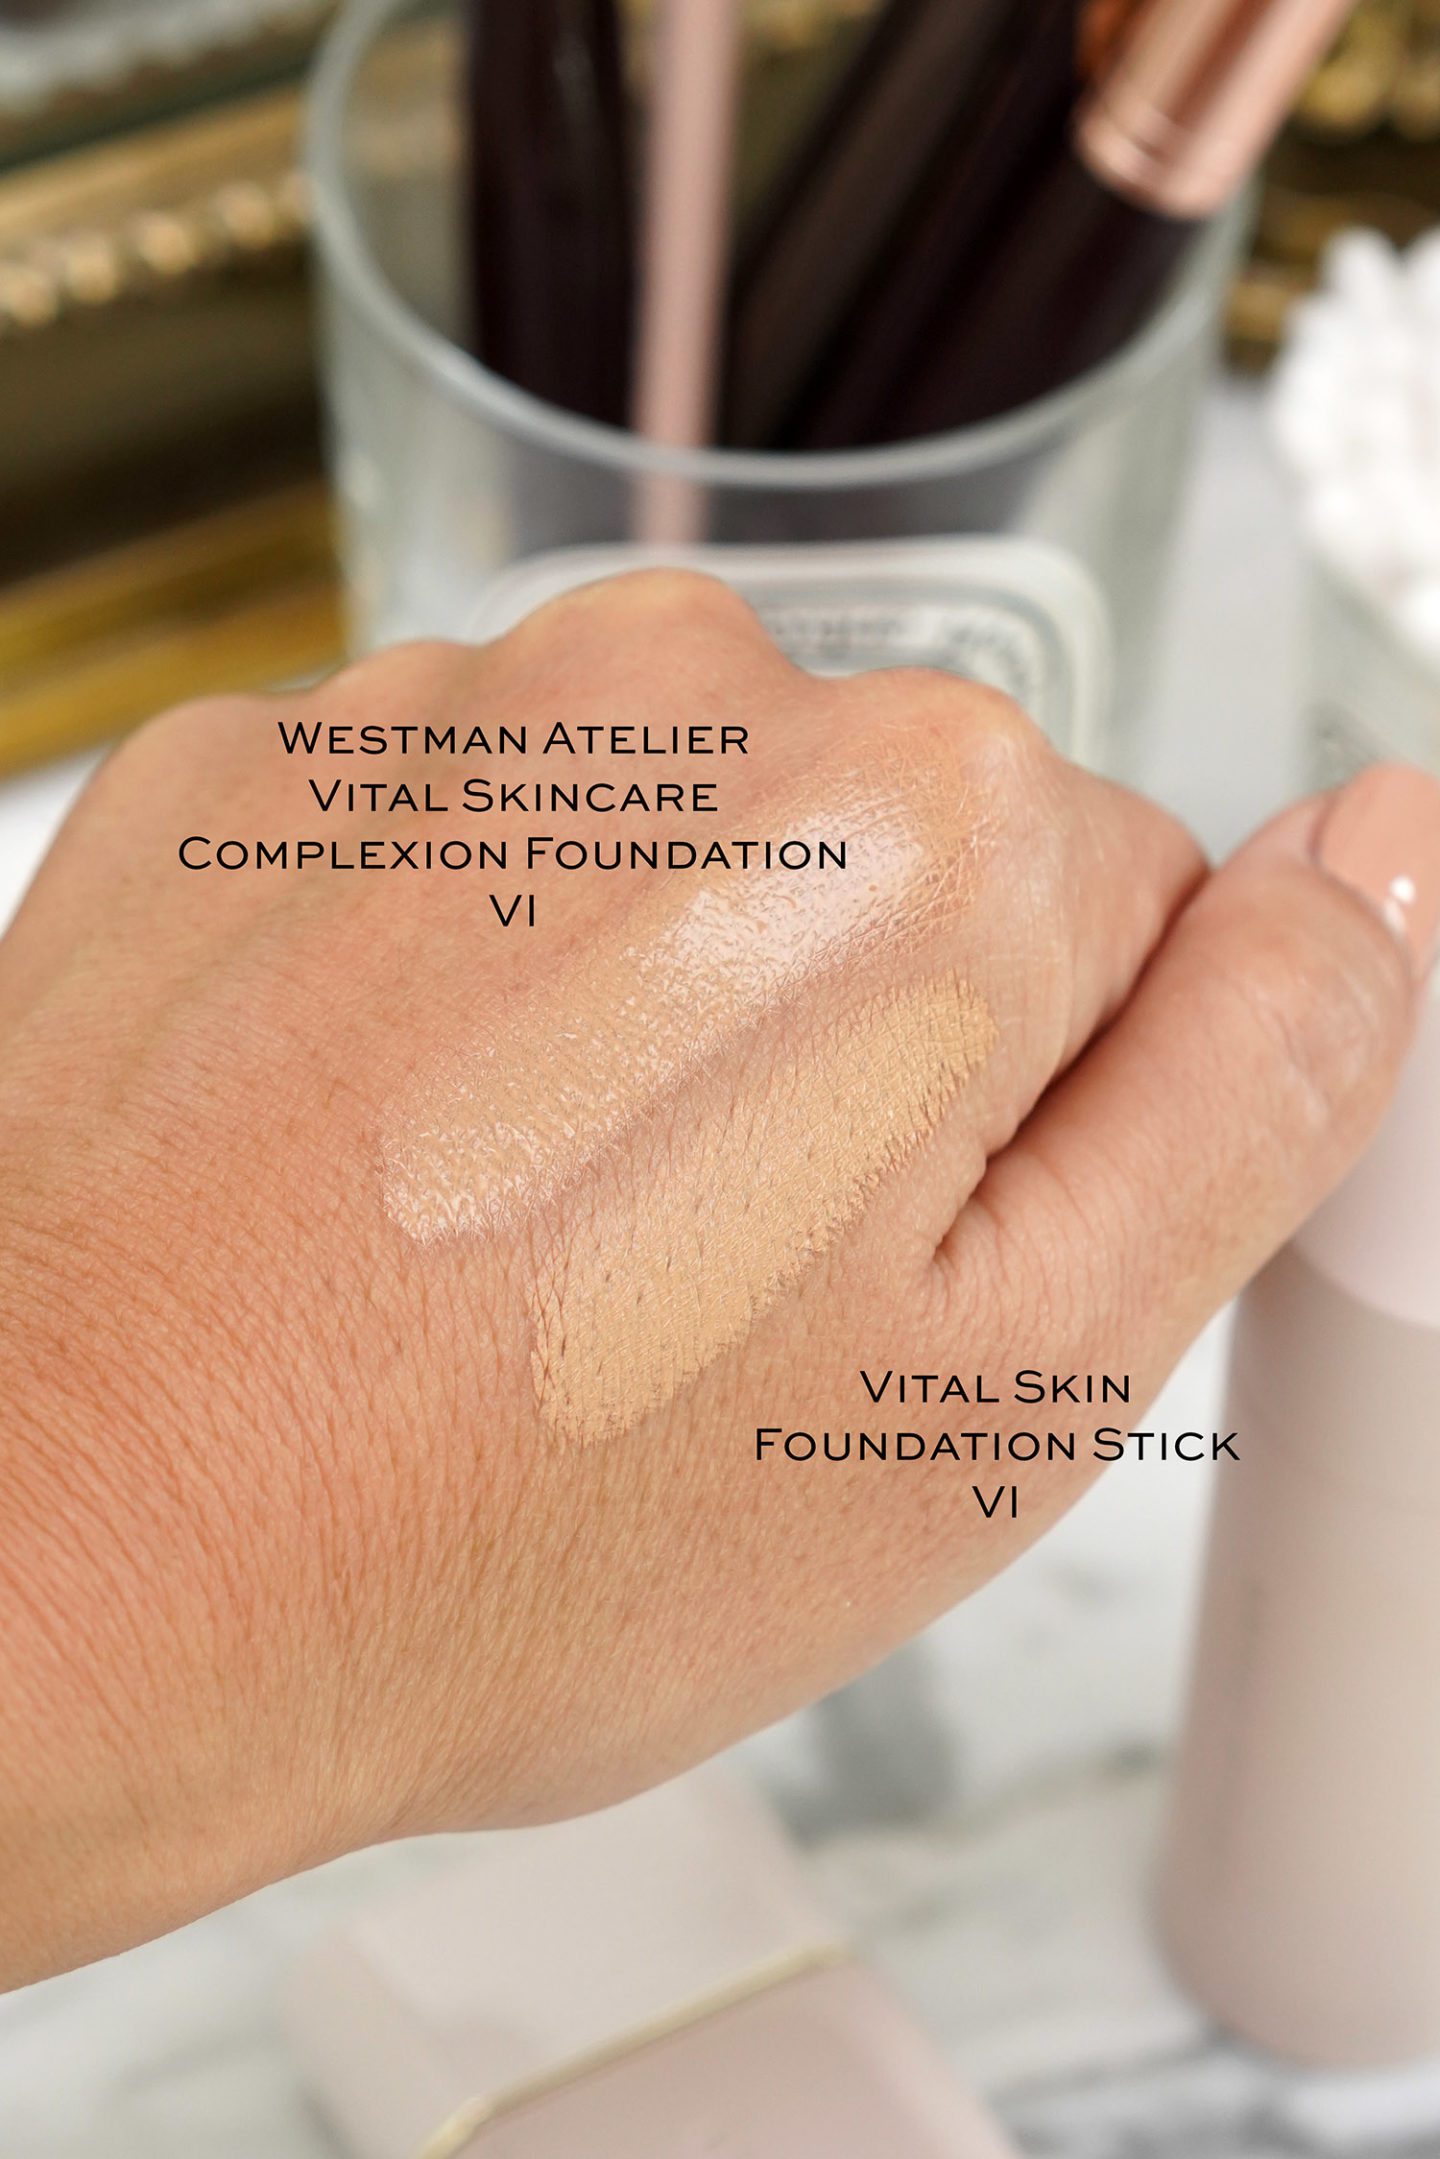 Westman Atelier Vital Skincare Complexion Foundation & Stick Foundation Review VI